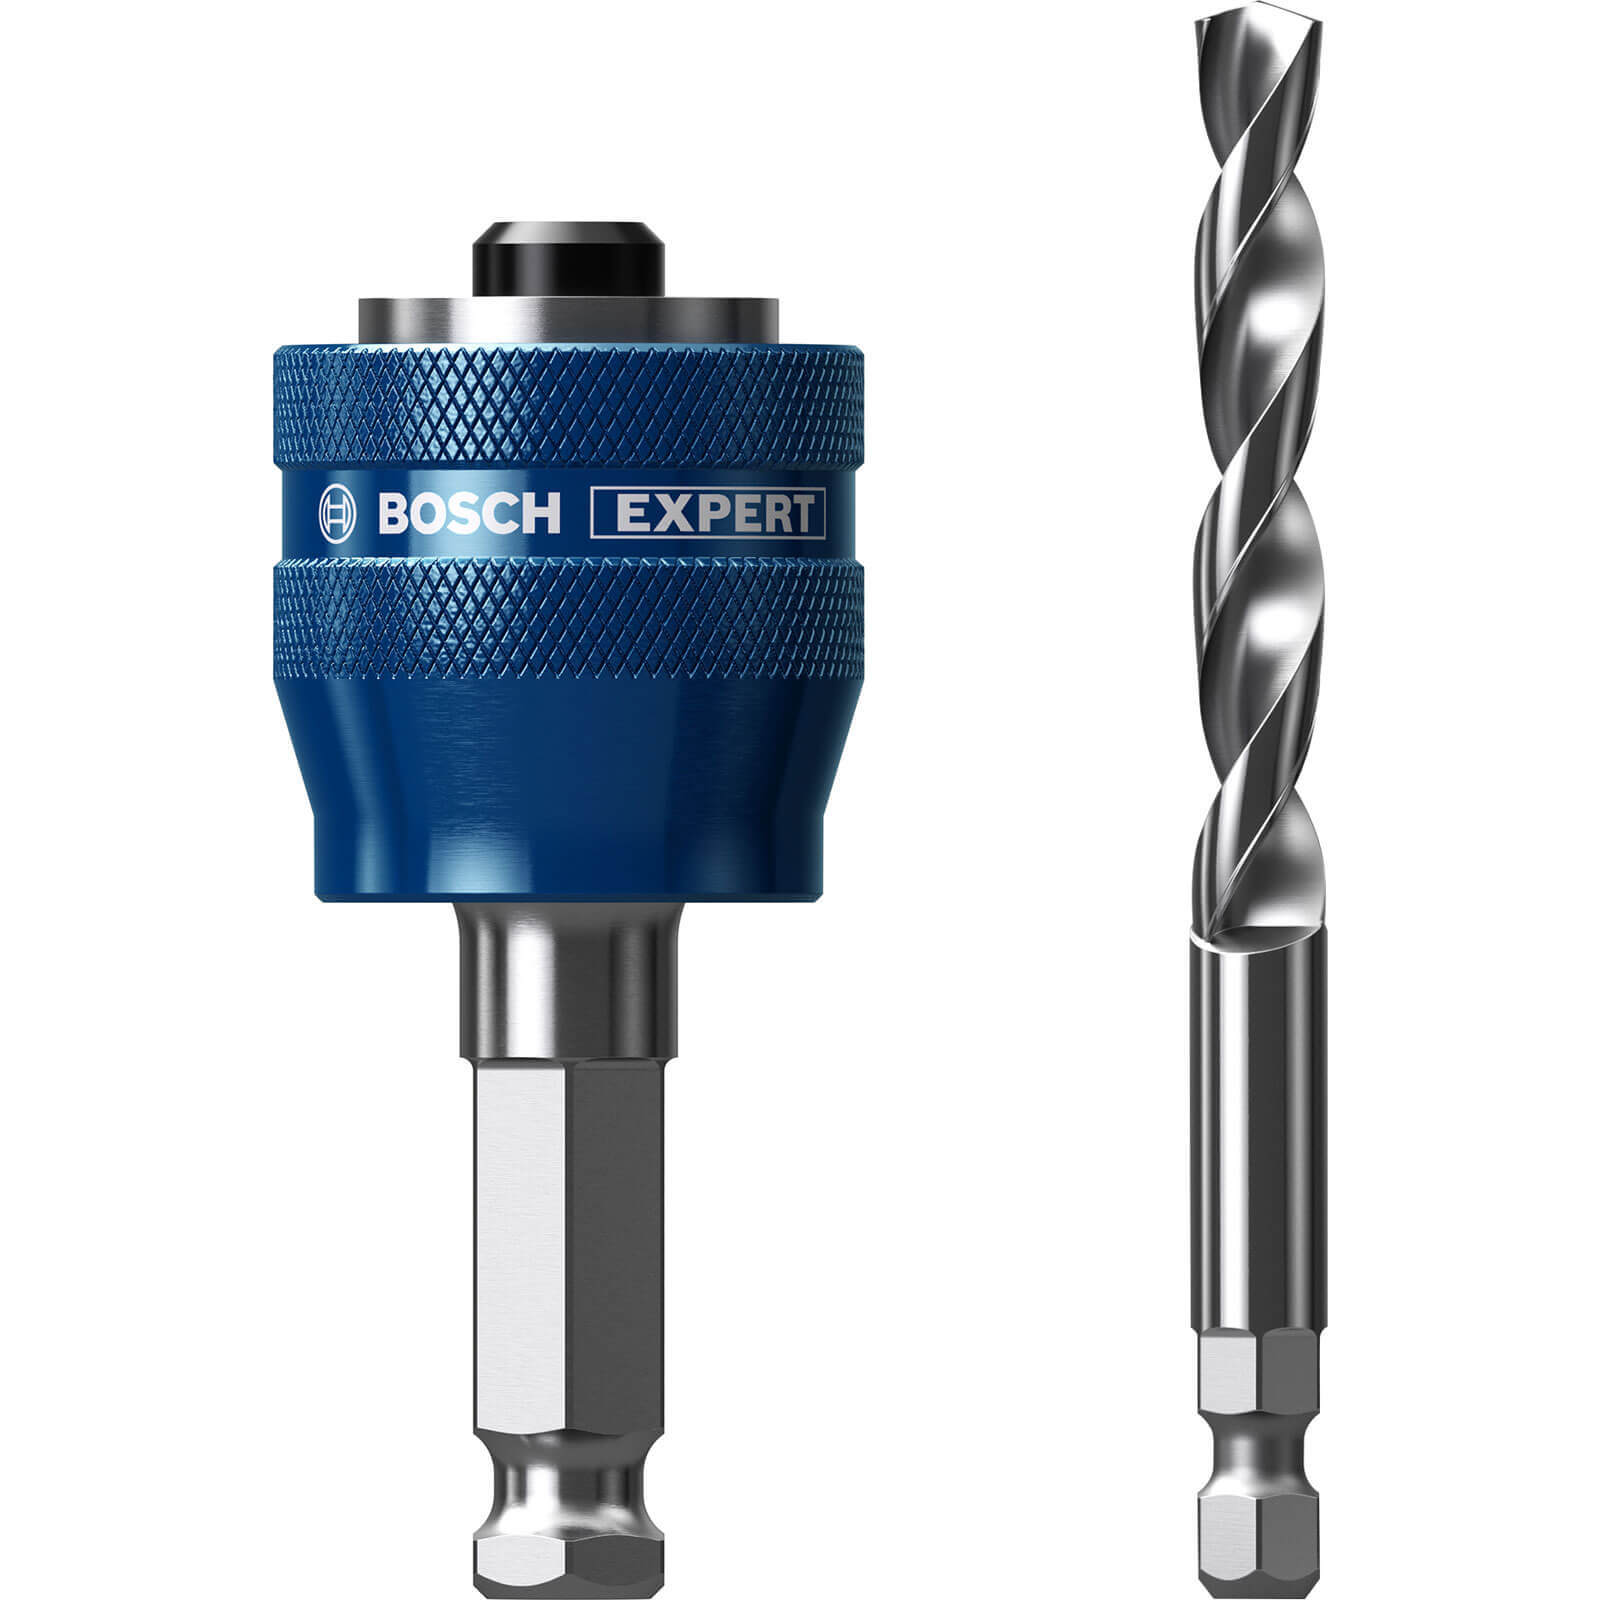 Bosch Expert Power Change Plus Hole Saw Adaptor and HSS-G Drill